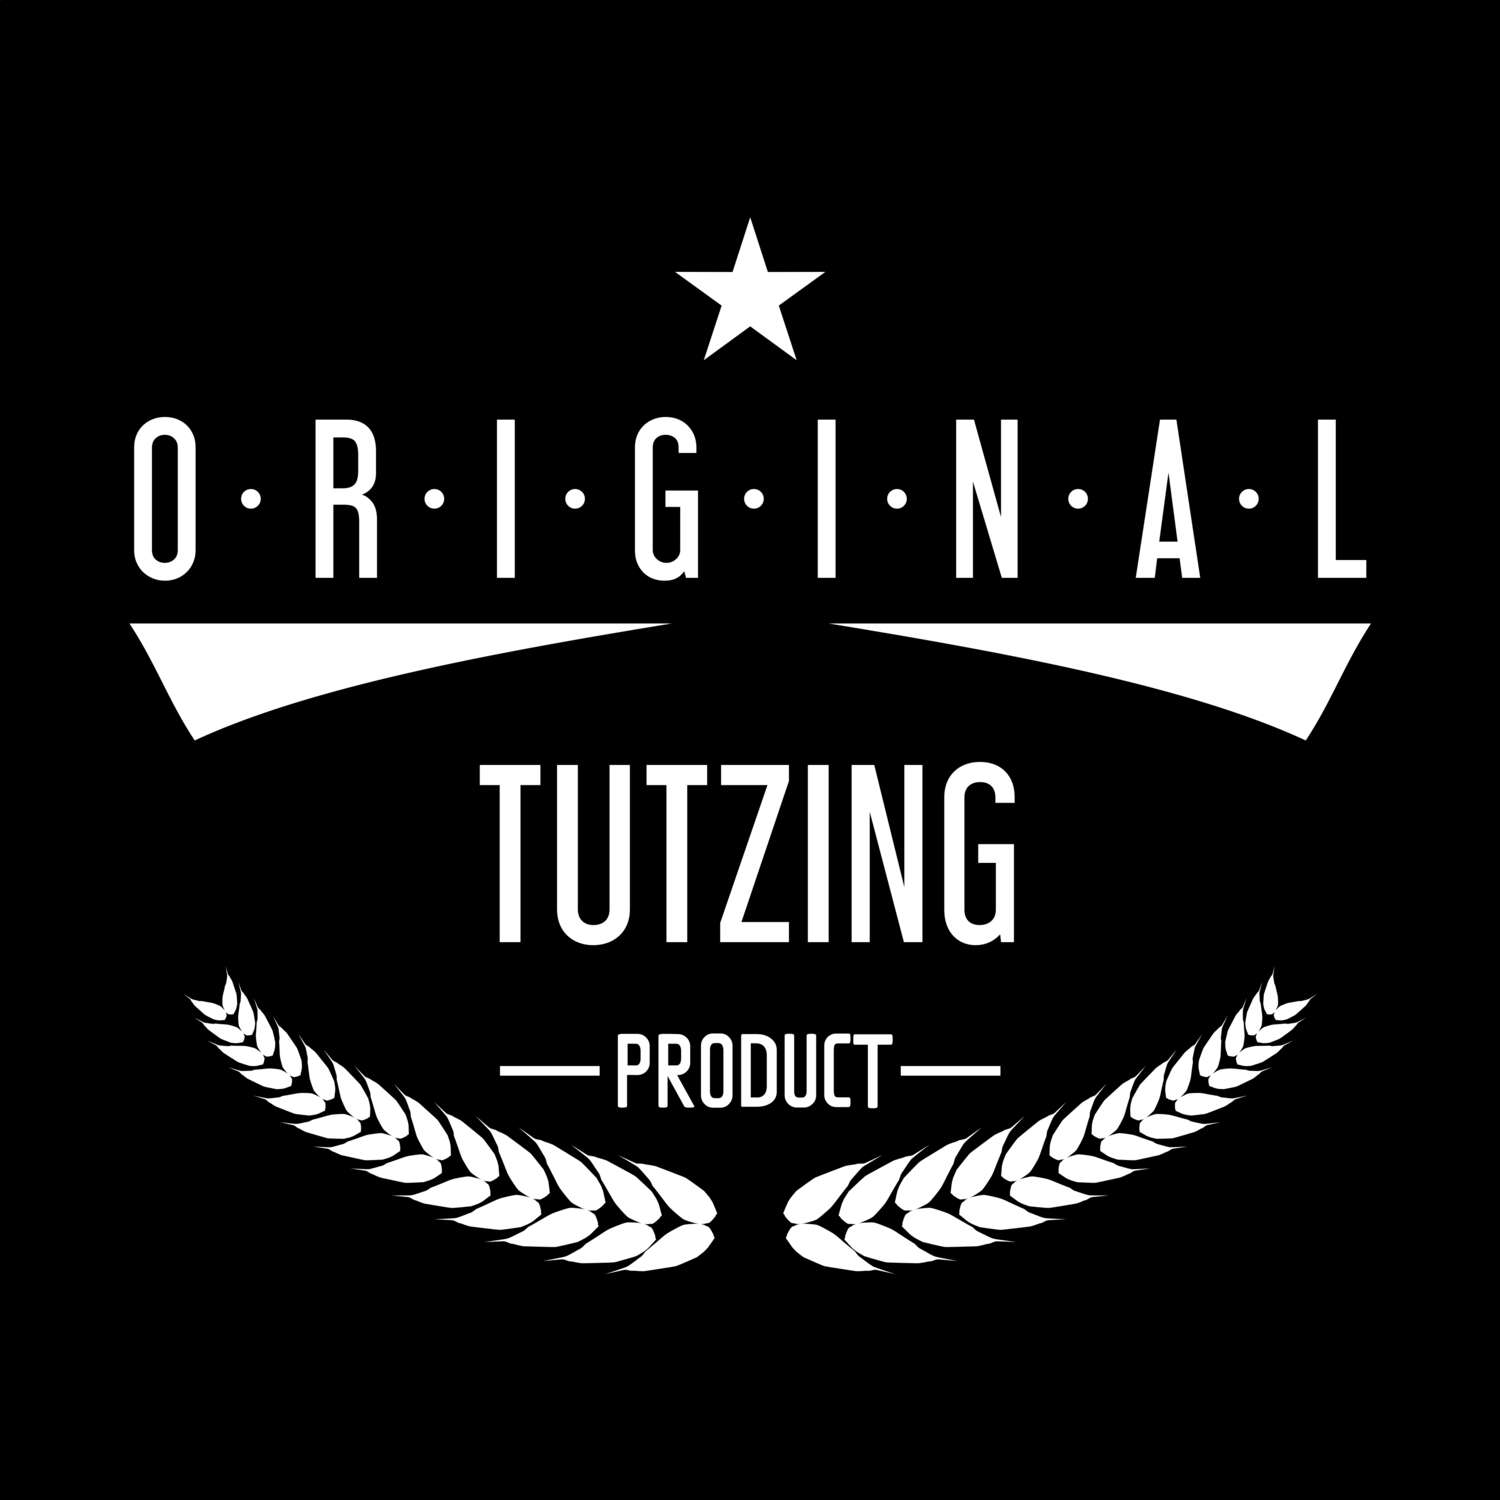 Tutzing T-Shirt »Original Product«